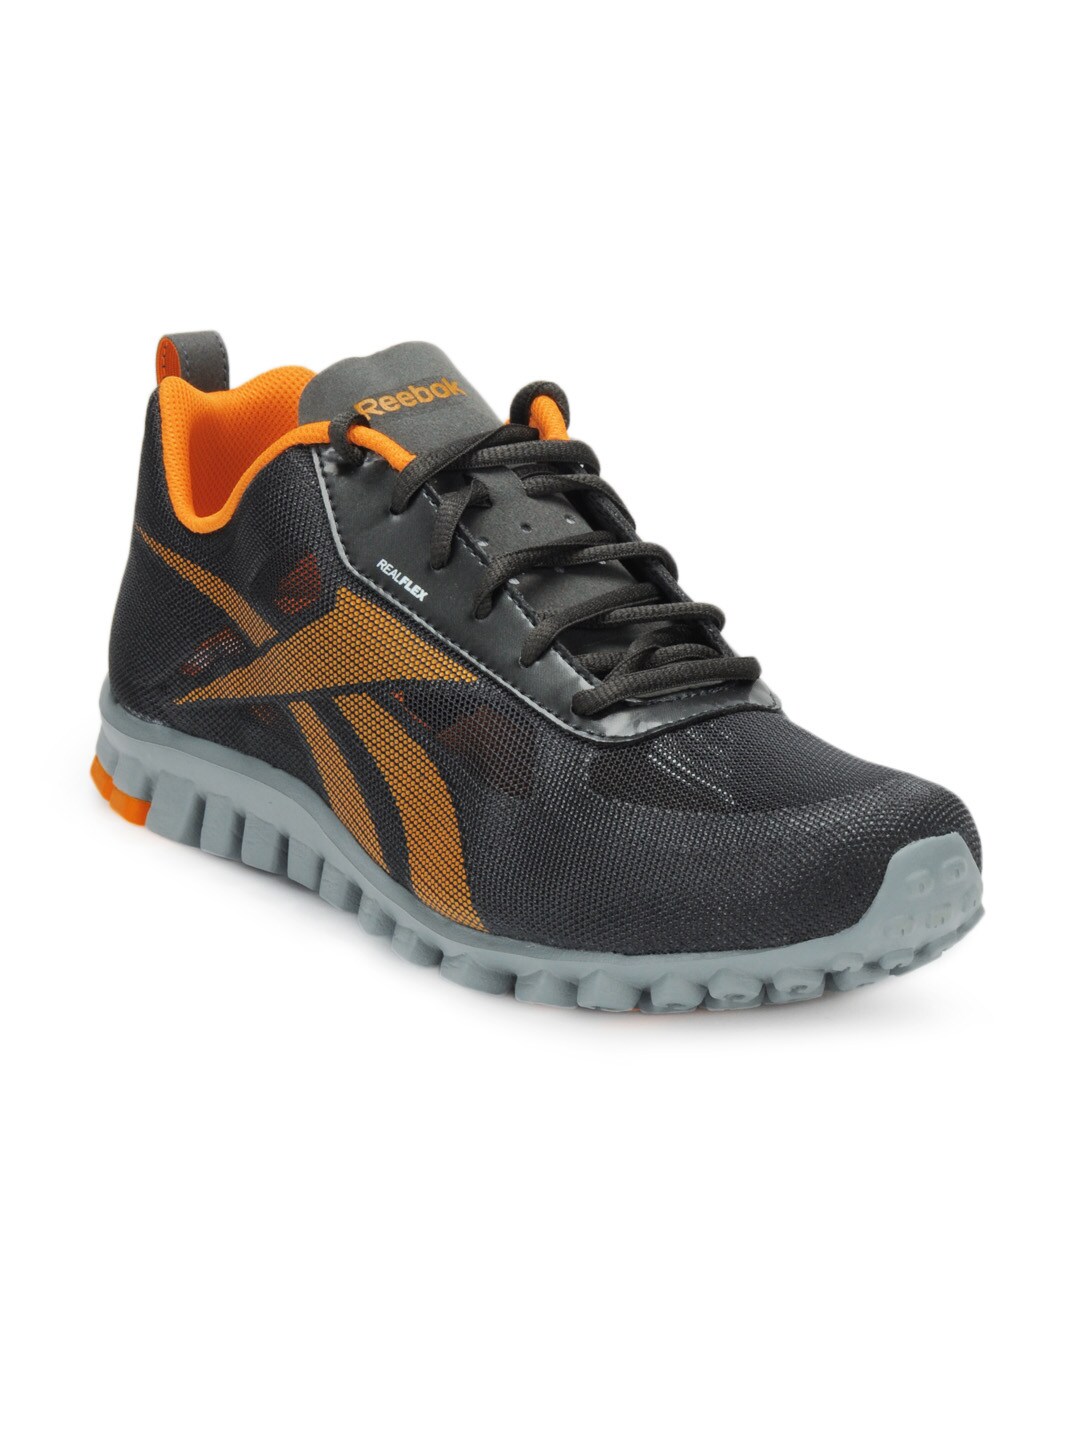 Reebok Men Charcoal Realflex Breeze Sports Shoes